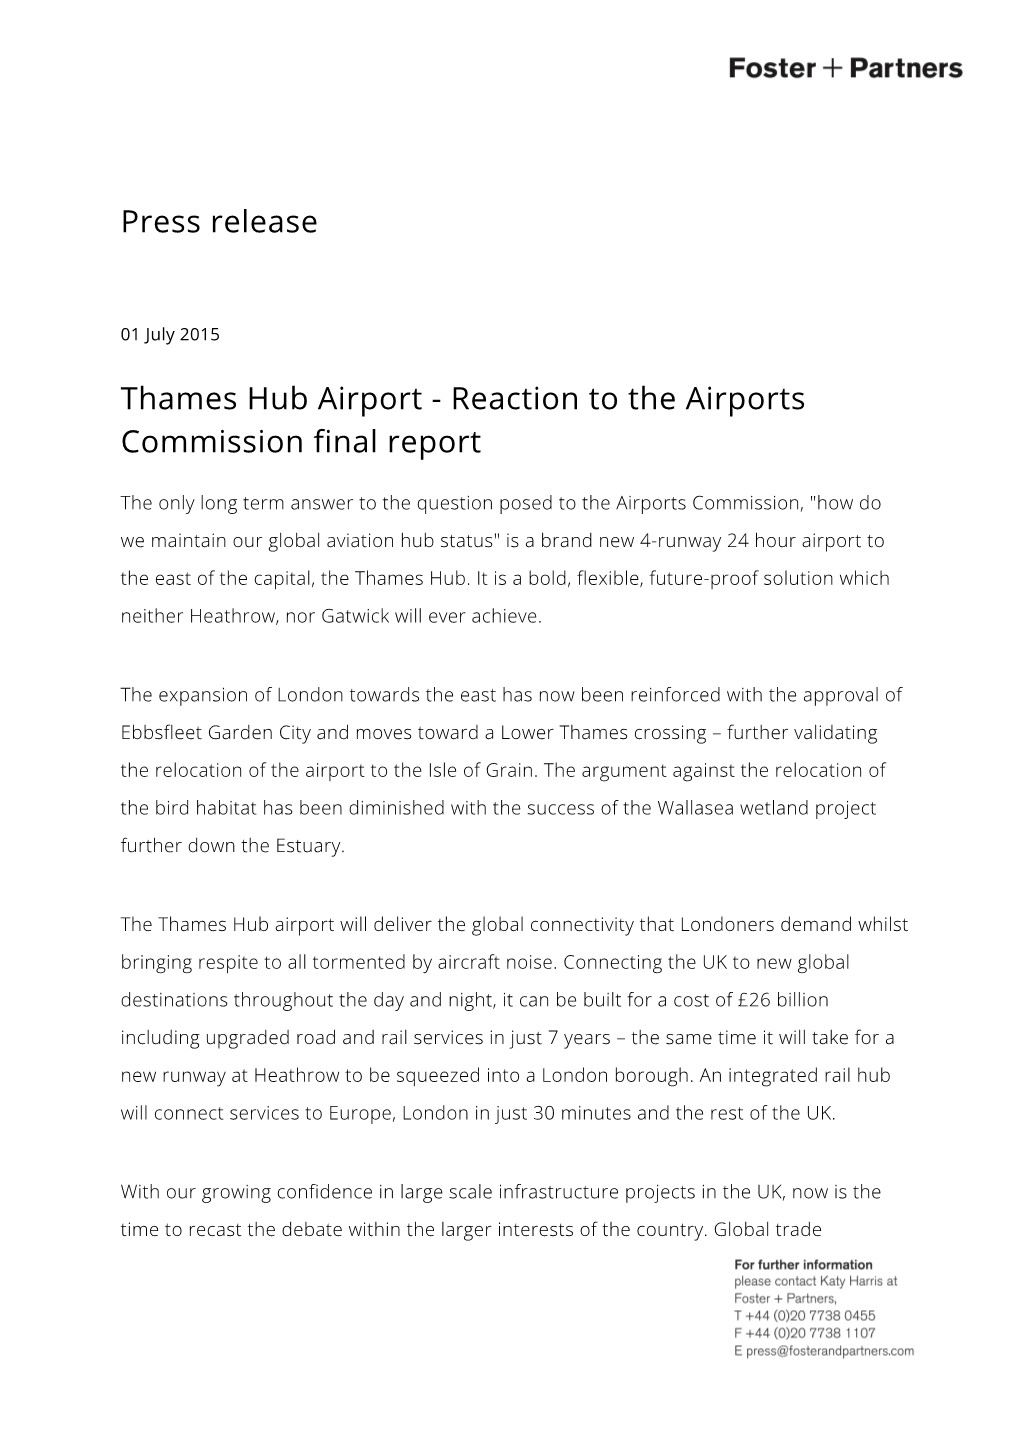 Press Release Thames Hub Airport